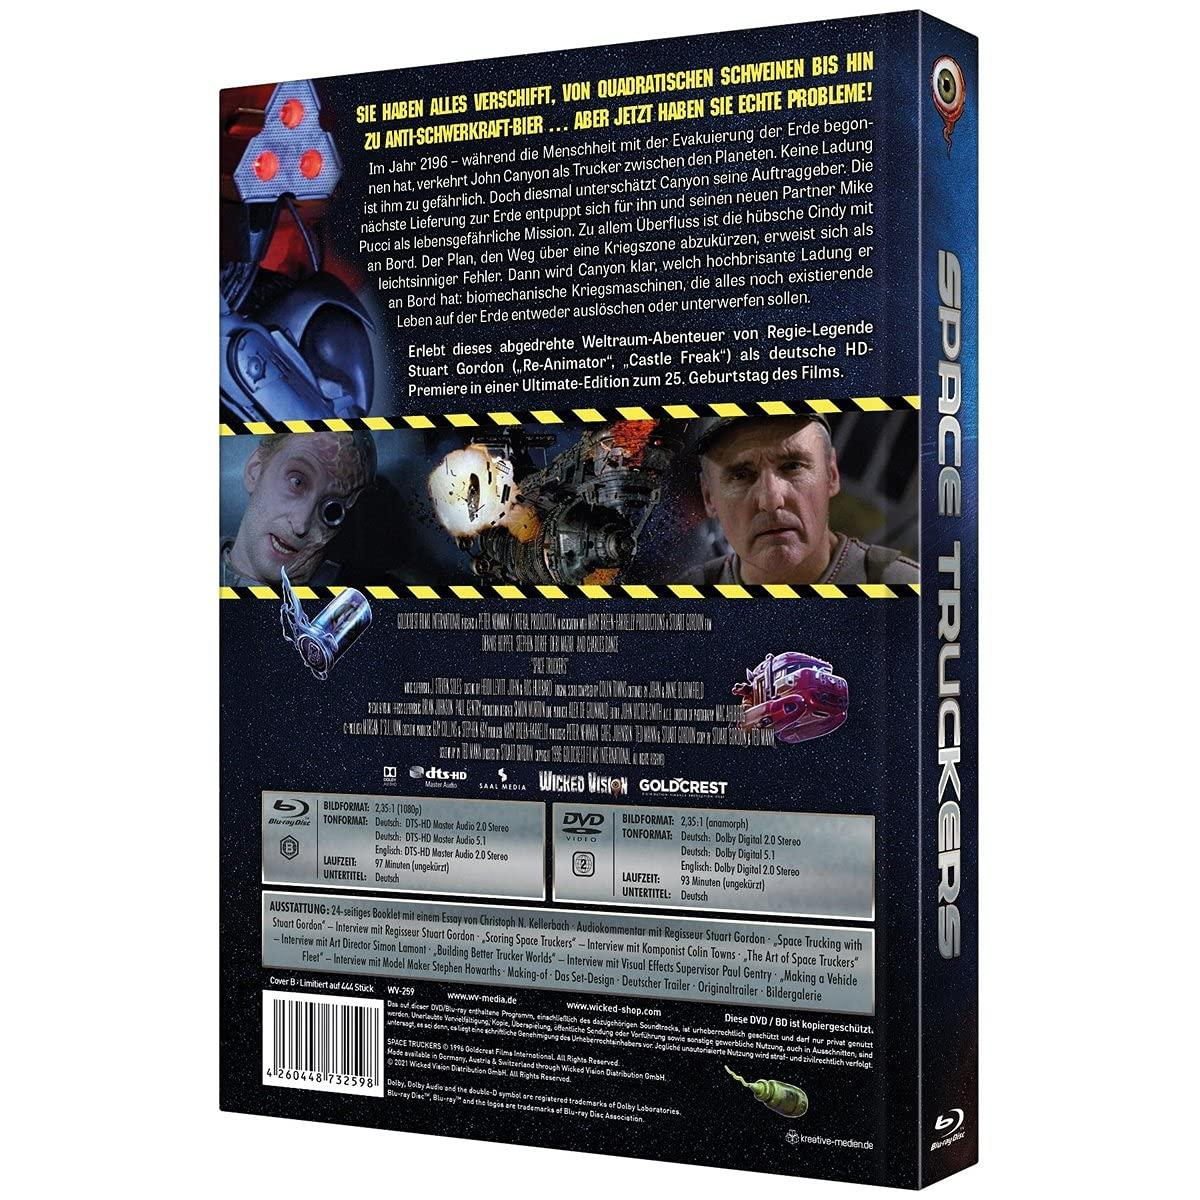 Space Truckers Blu-ray + DVD